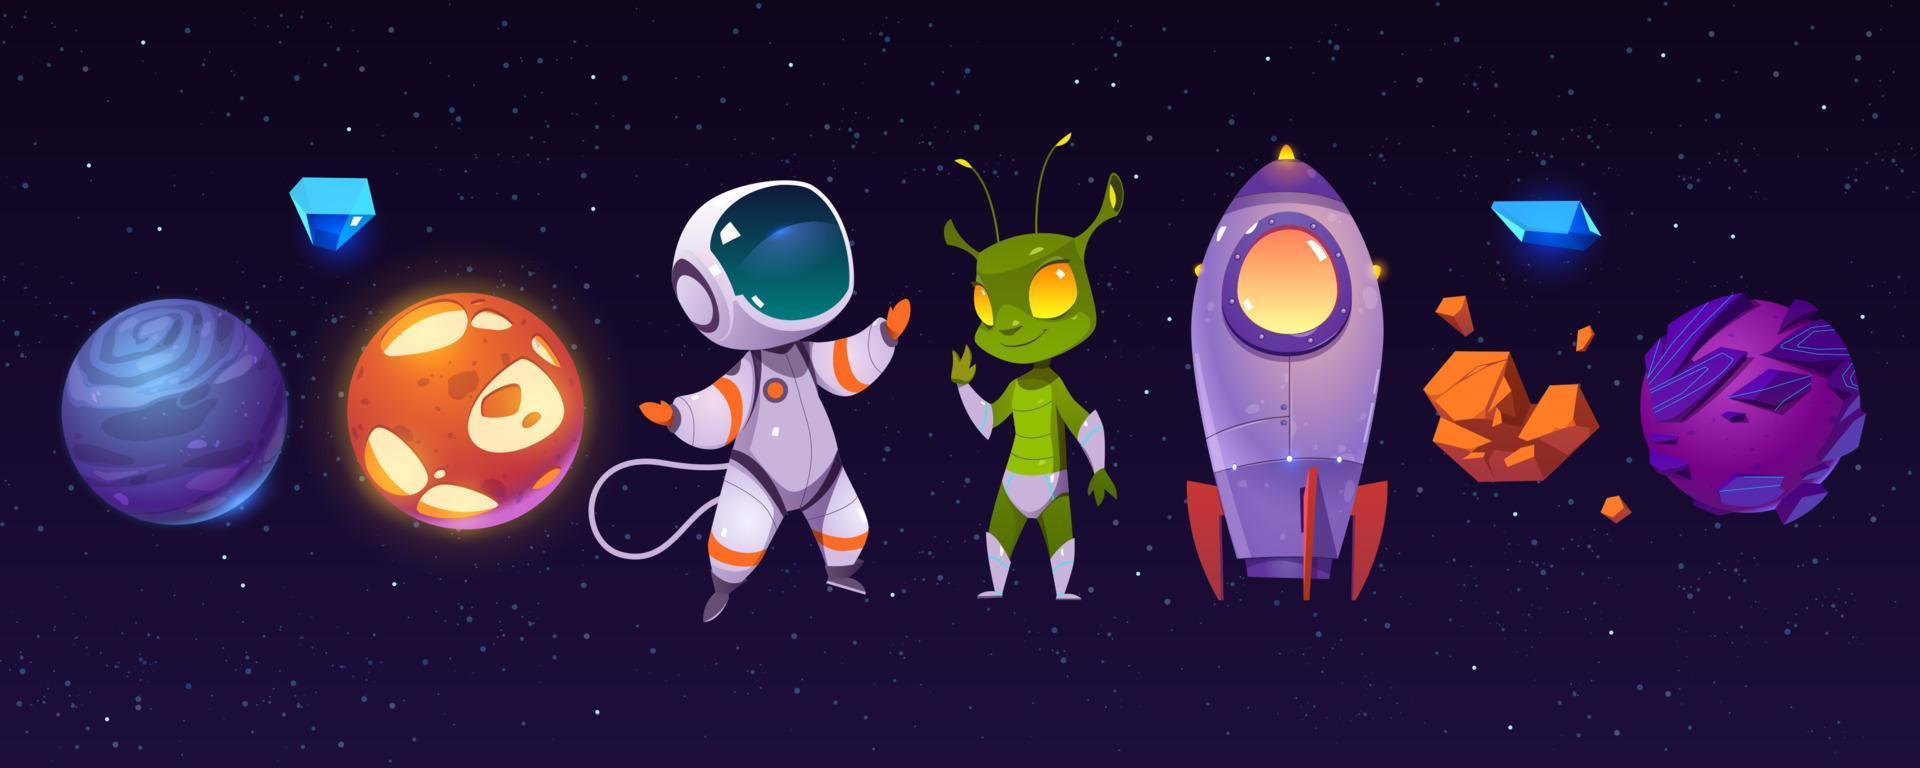 Alien, planets, astronaut and rocket in cosmos vector